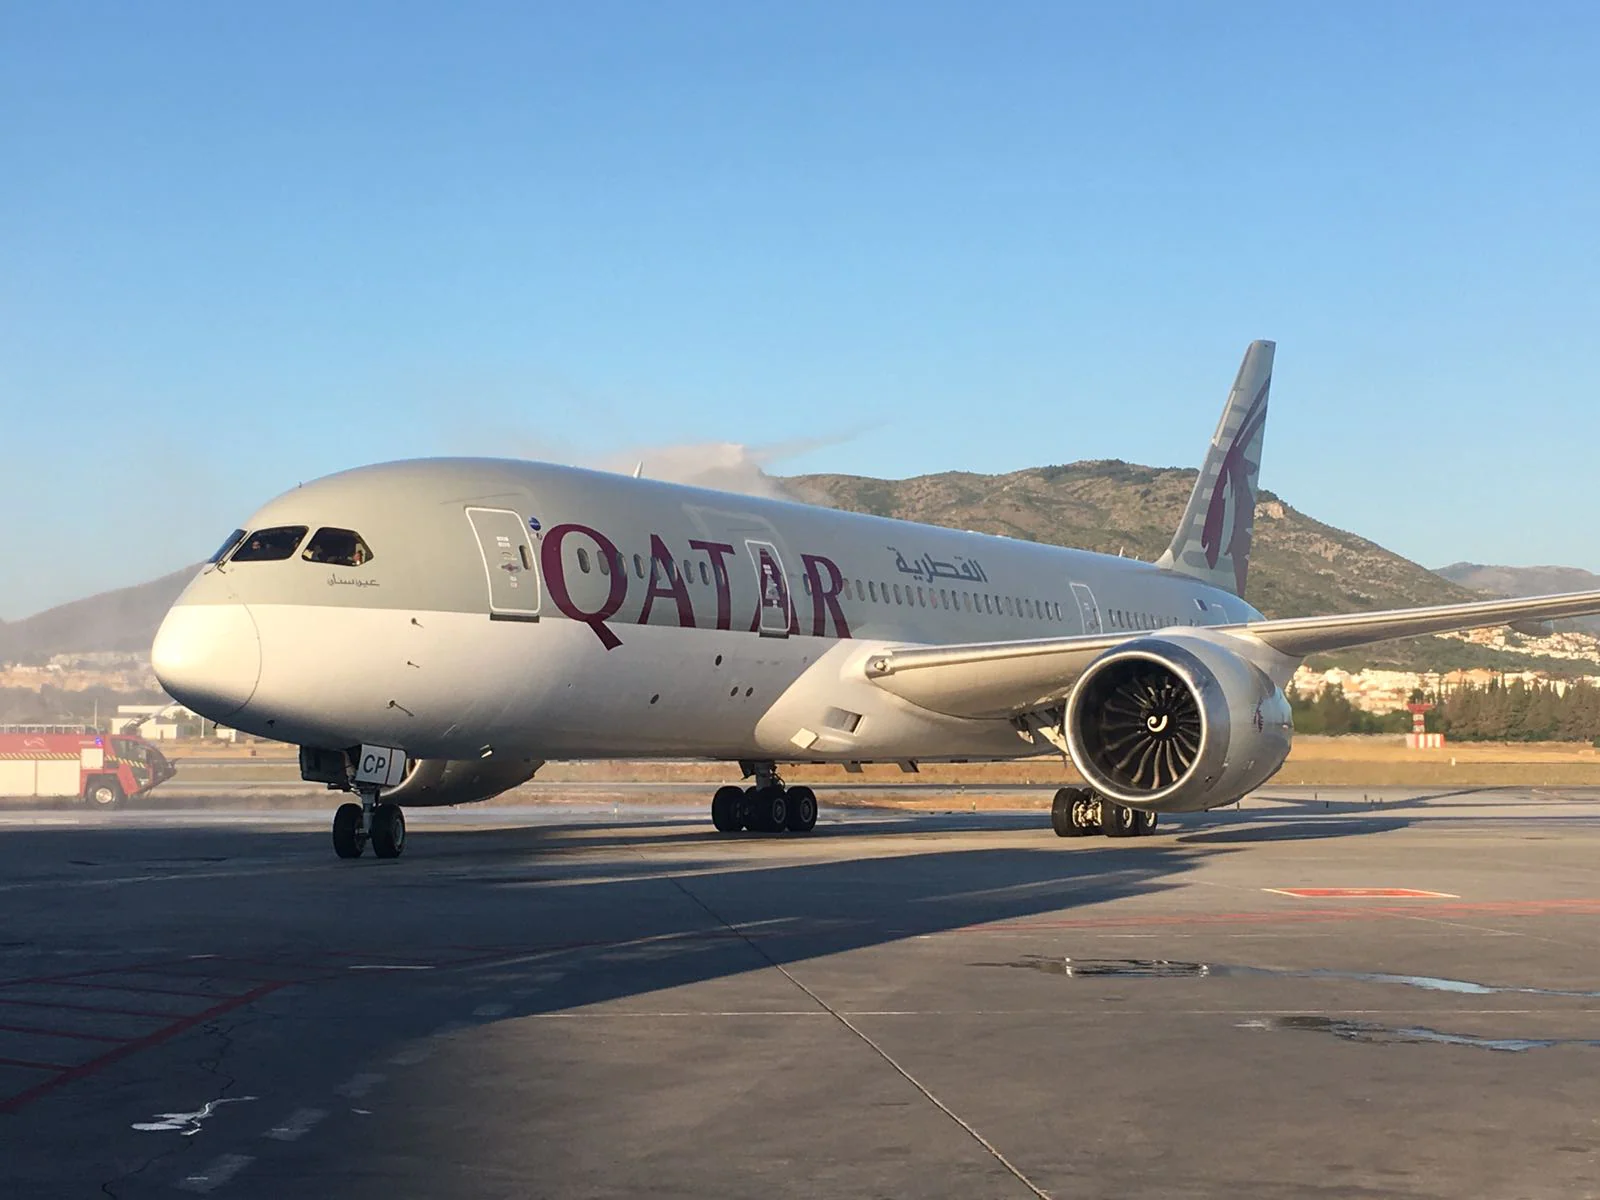 A Qatar Airways aircraft at Malaga Airport.